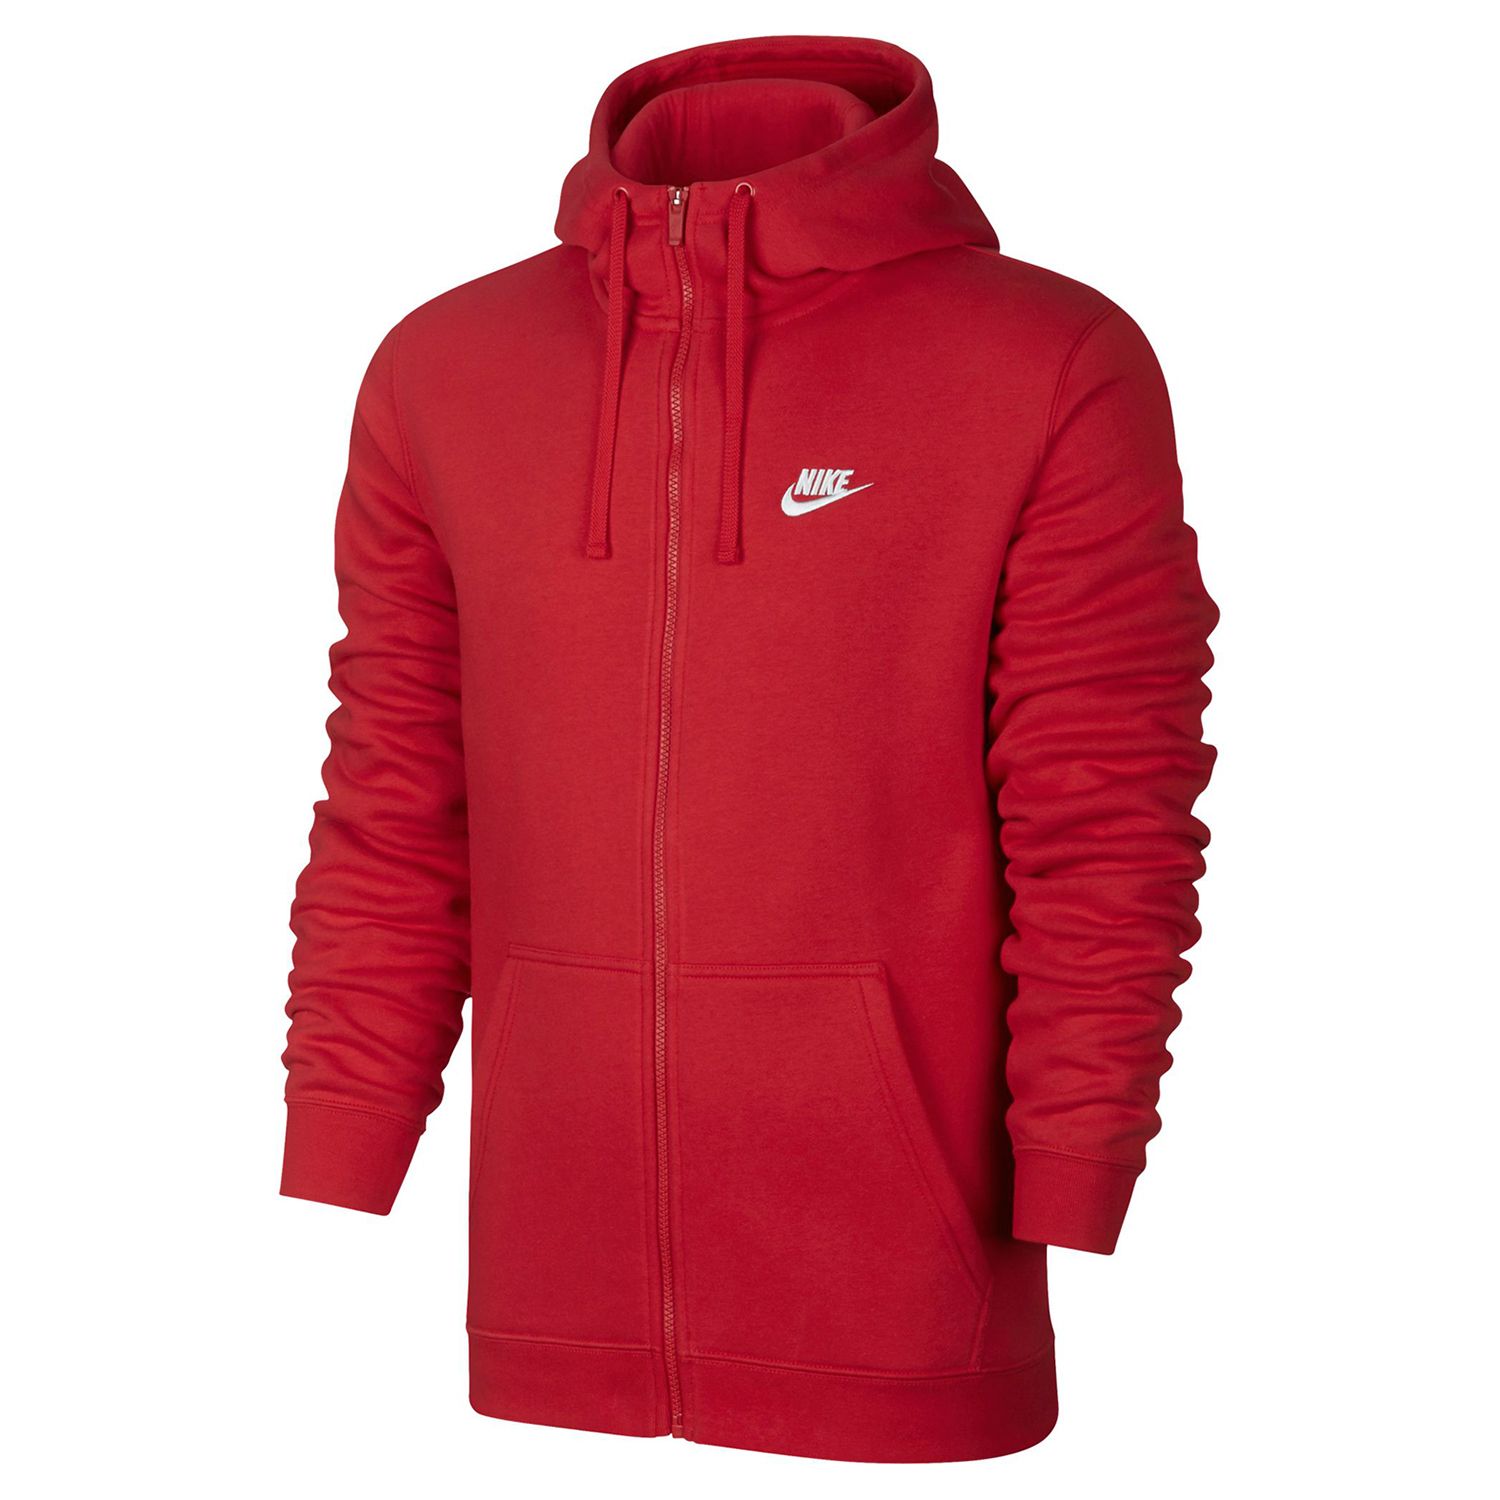 red nike hoodie with zipper